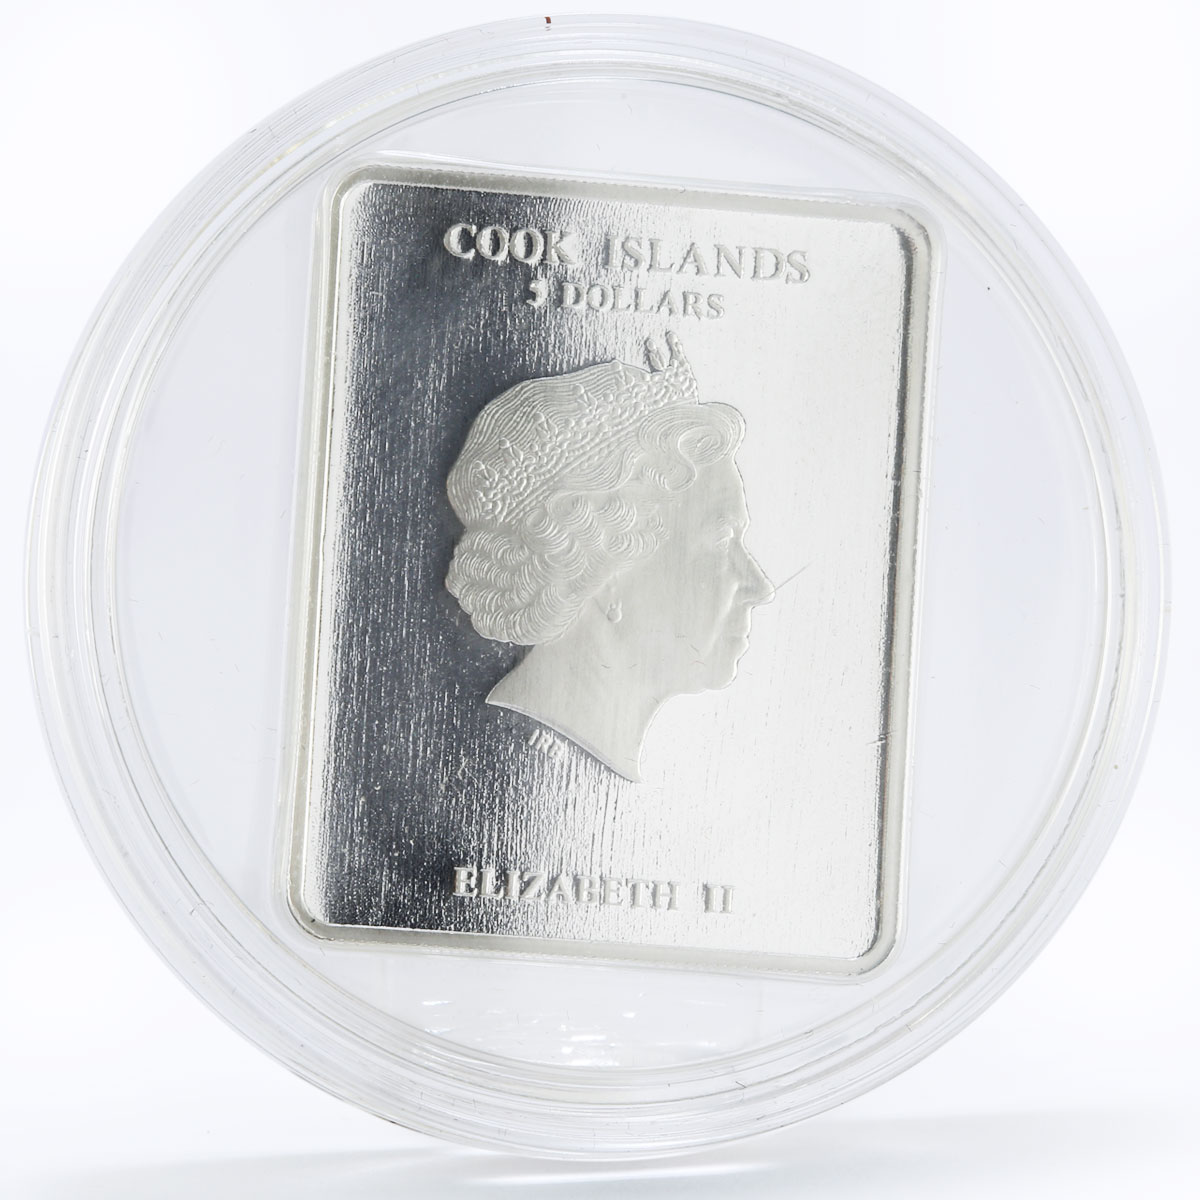 Cook Islands 5 dollars Patron Saints series St. Anna silver coin 2011